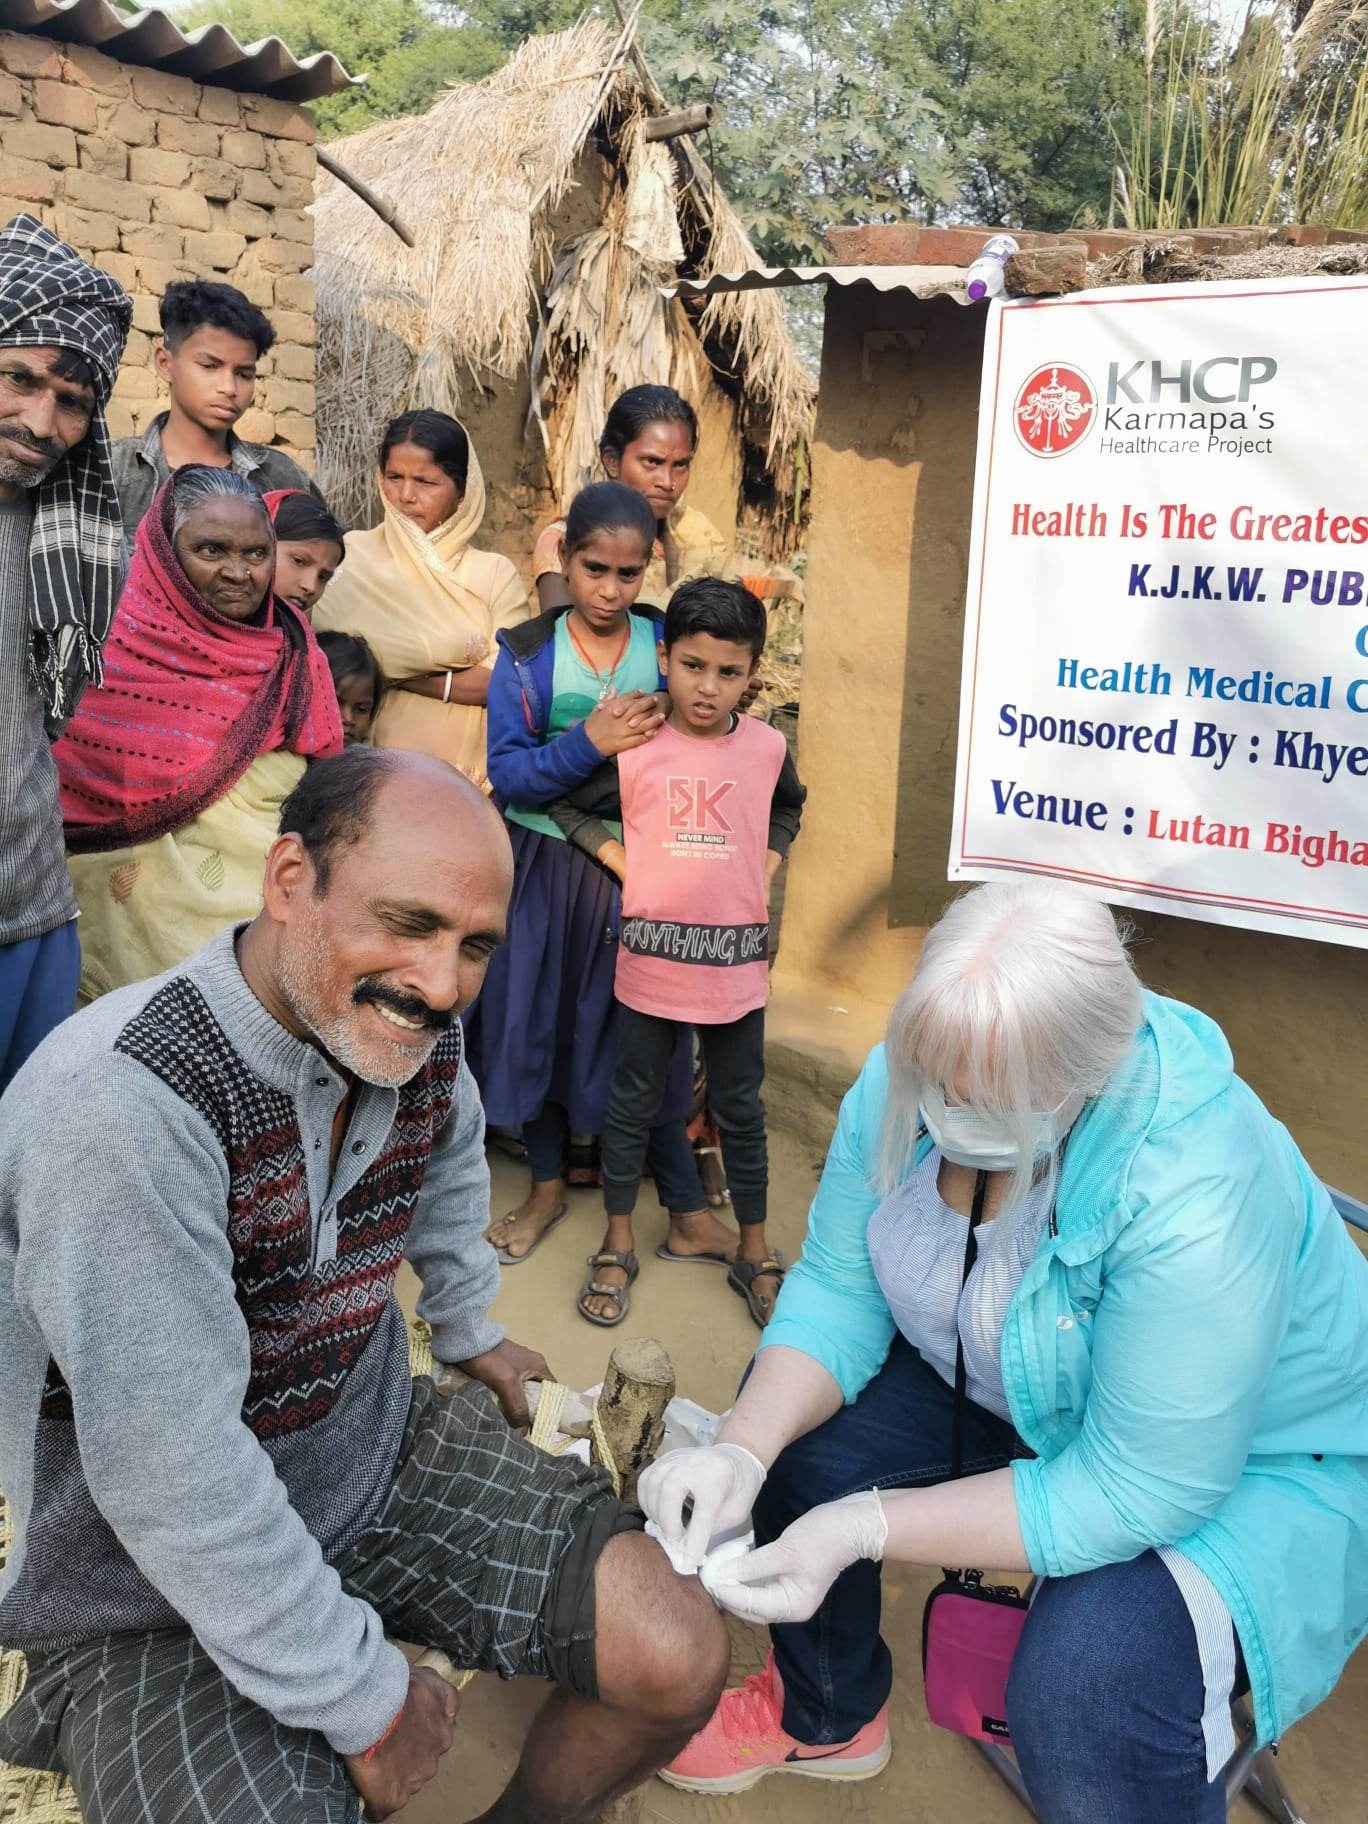 KHCP-KJKW-Medicalcamp in Luthan Bigha/India